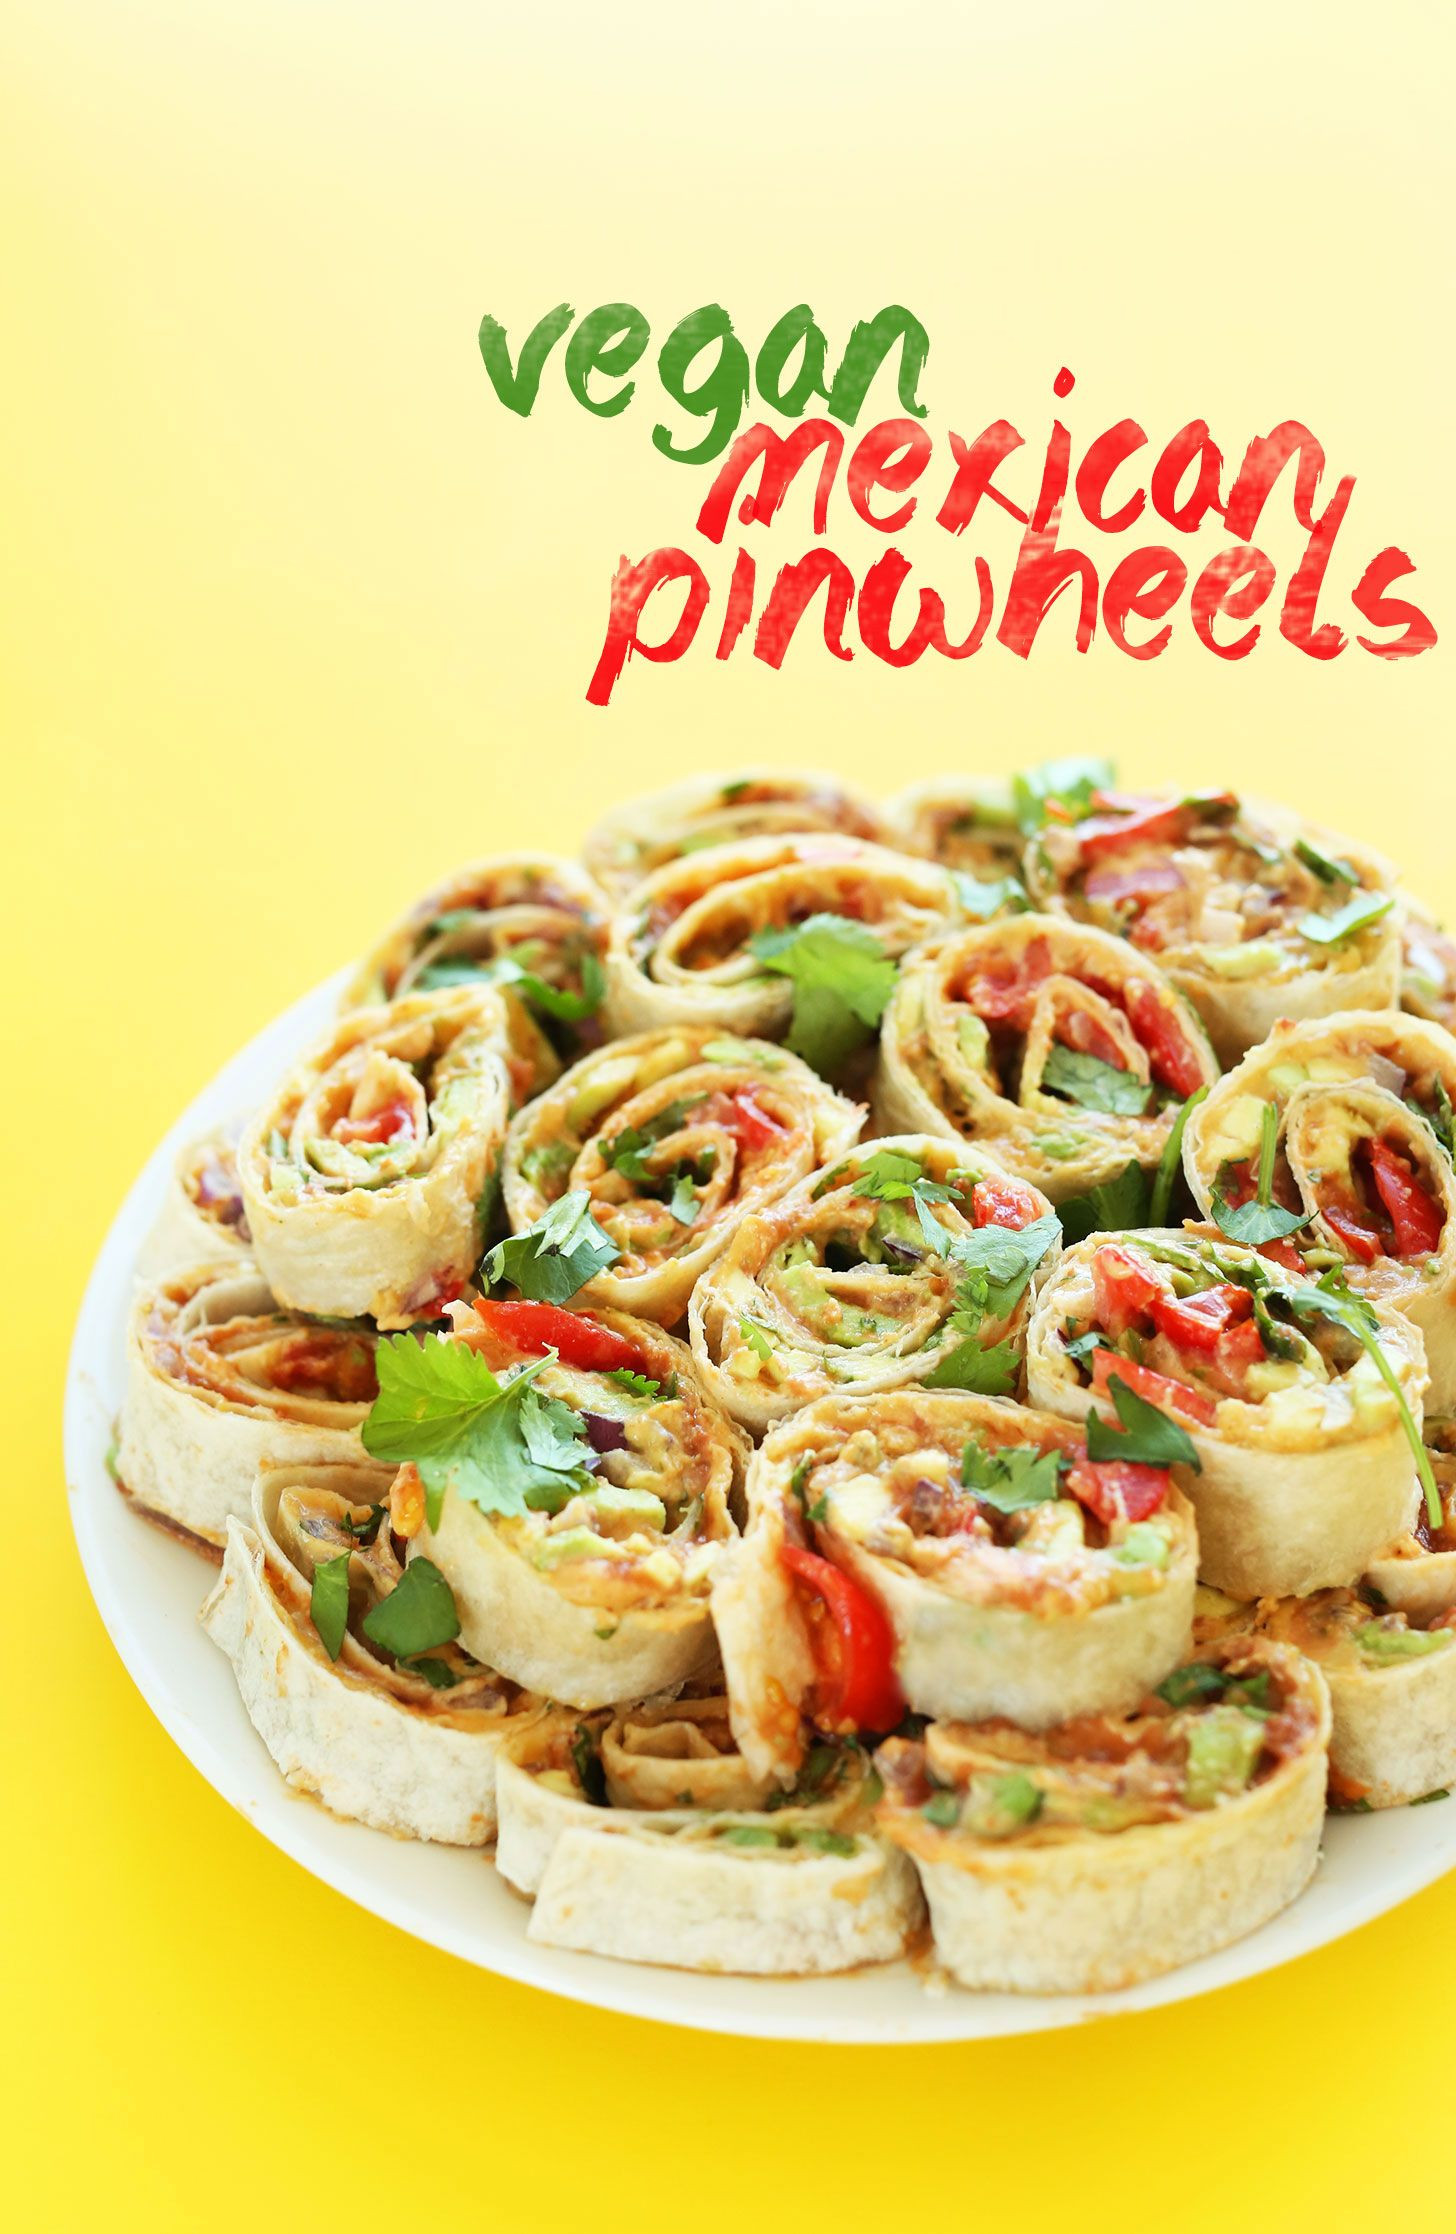 Vegetarian Appetizers Pinterest
 The 25 best Ve arian finger food ideas on Pinterest